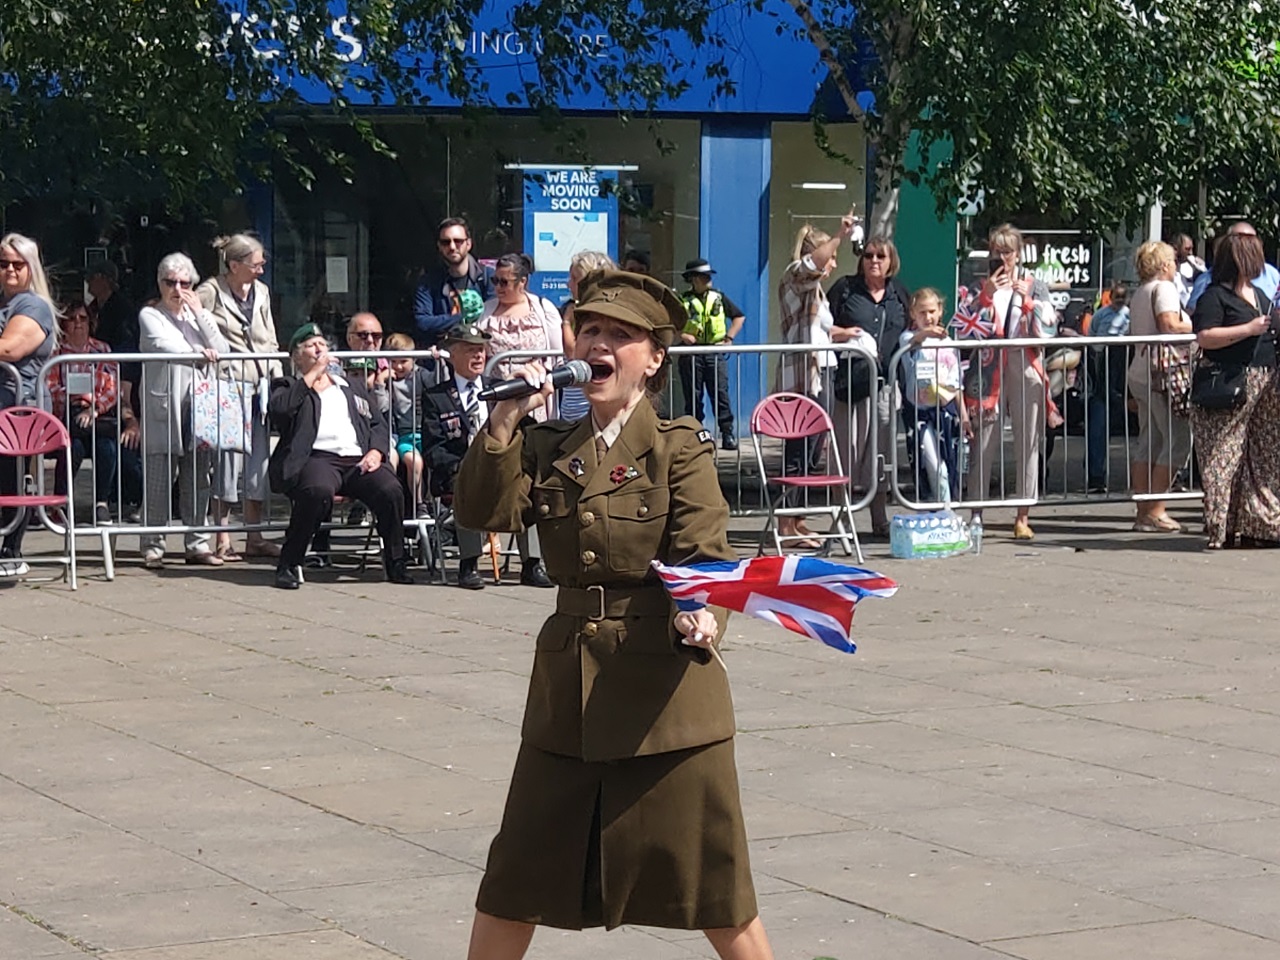 Female in army uniform singing holding a union jack flag